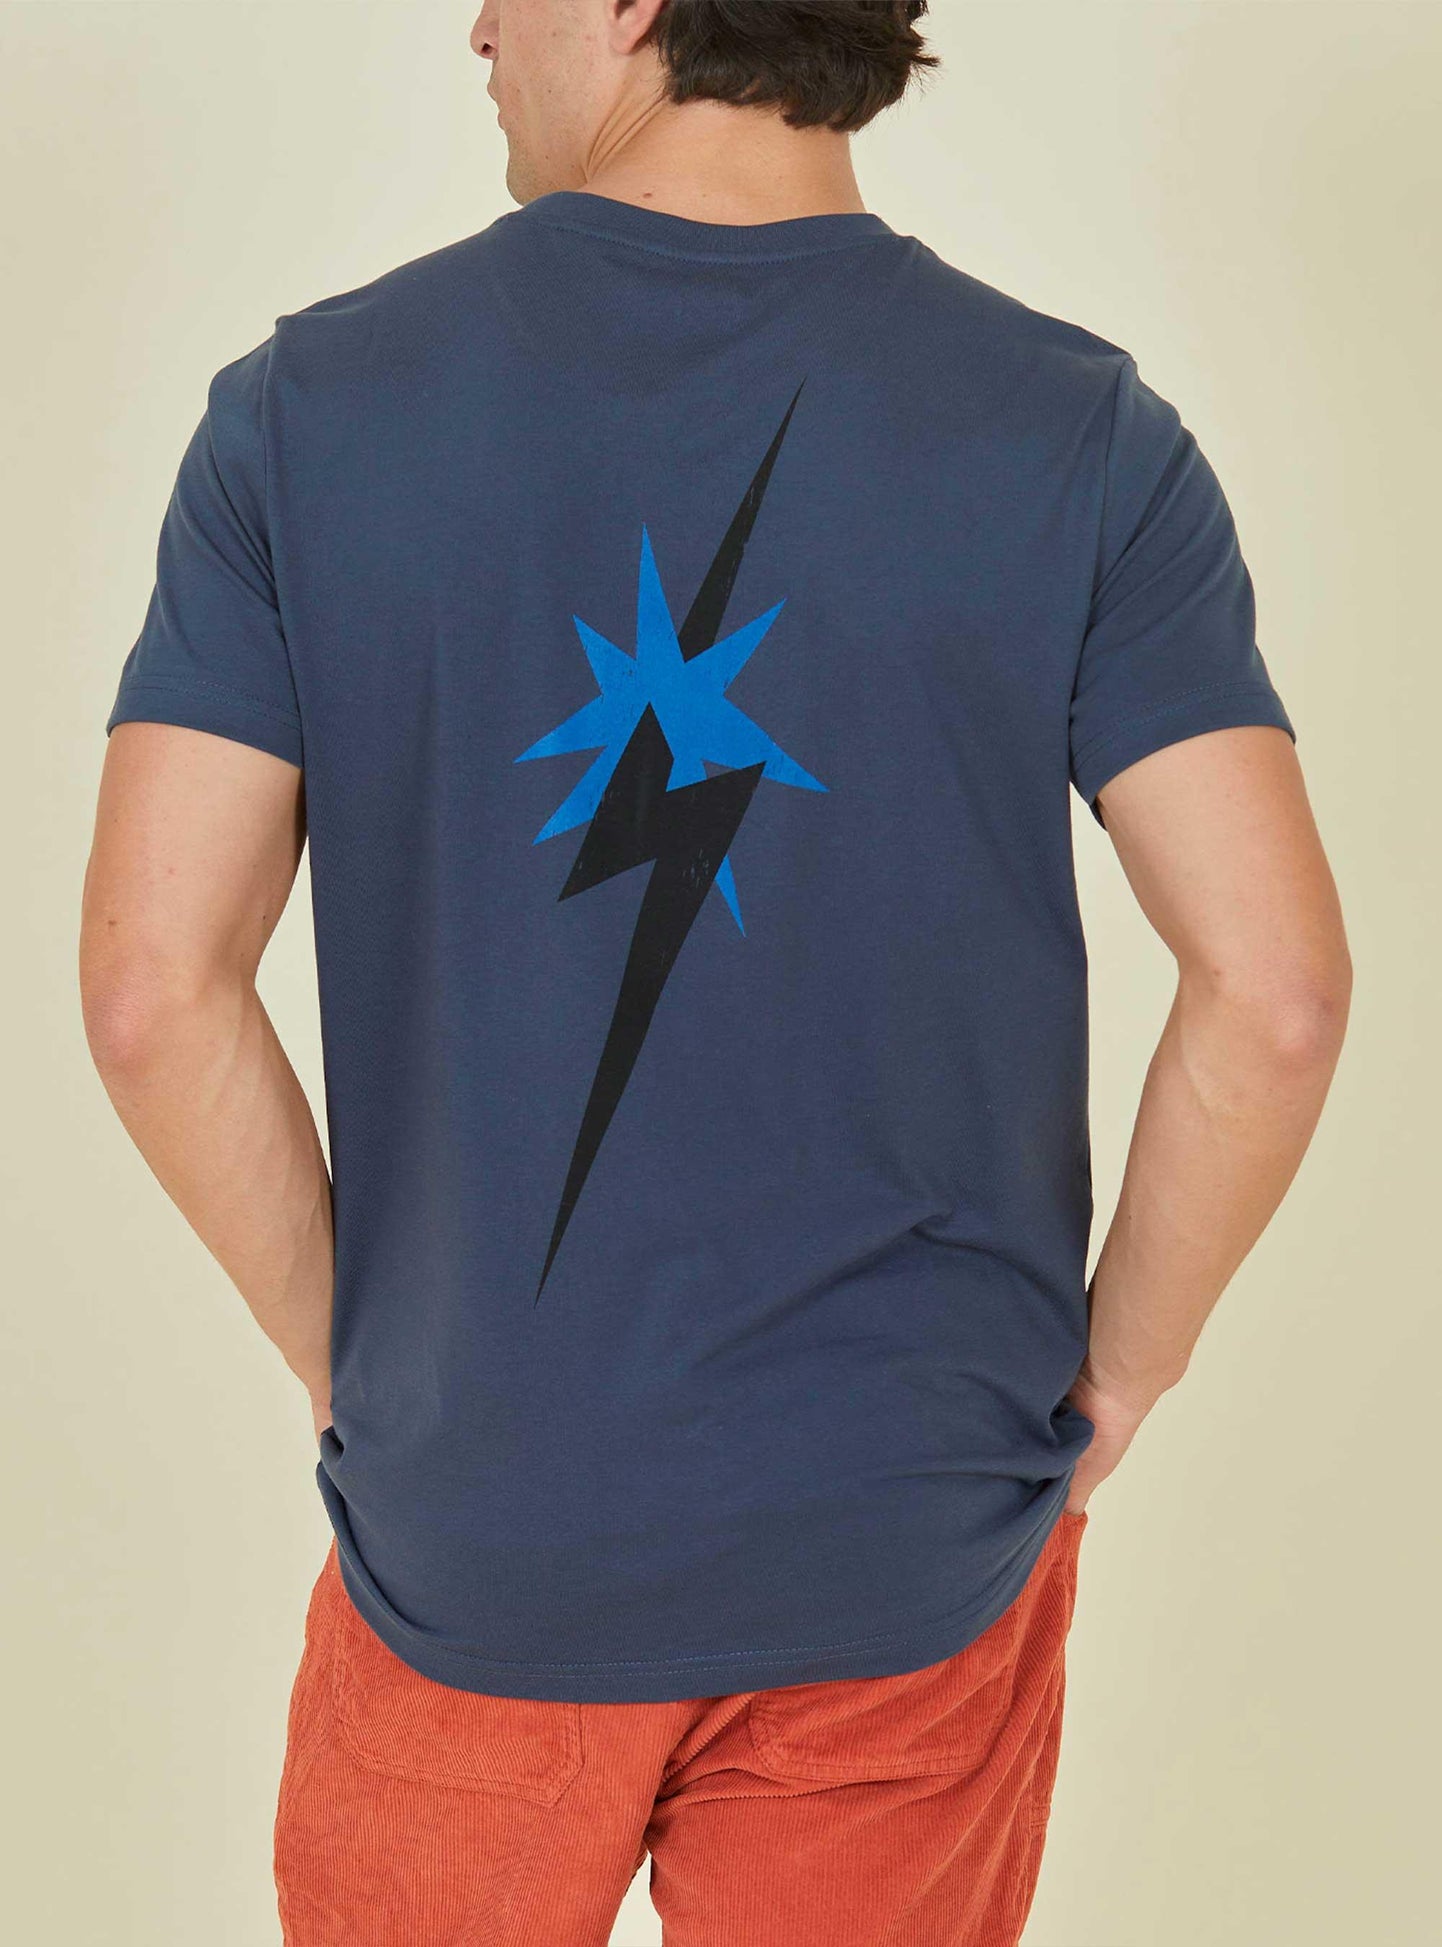 Camiseta De Manga Corta Lightning Bolt Starbolt Tee - Confort Y Calidad Portuguesa  MKP